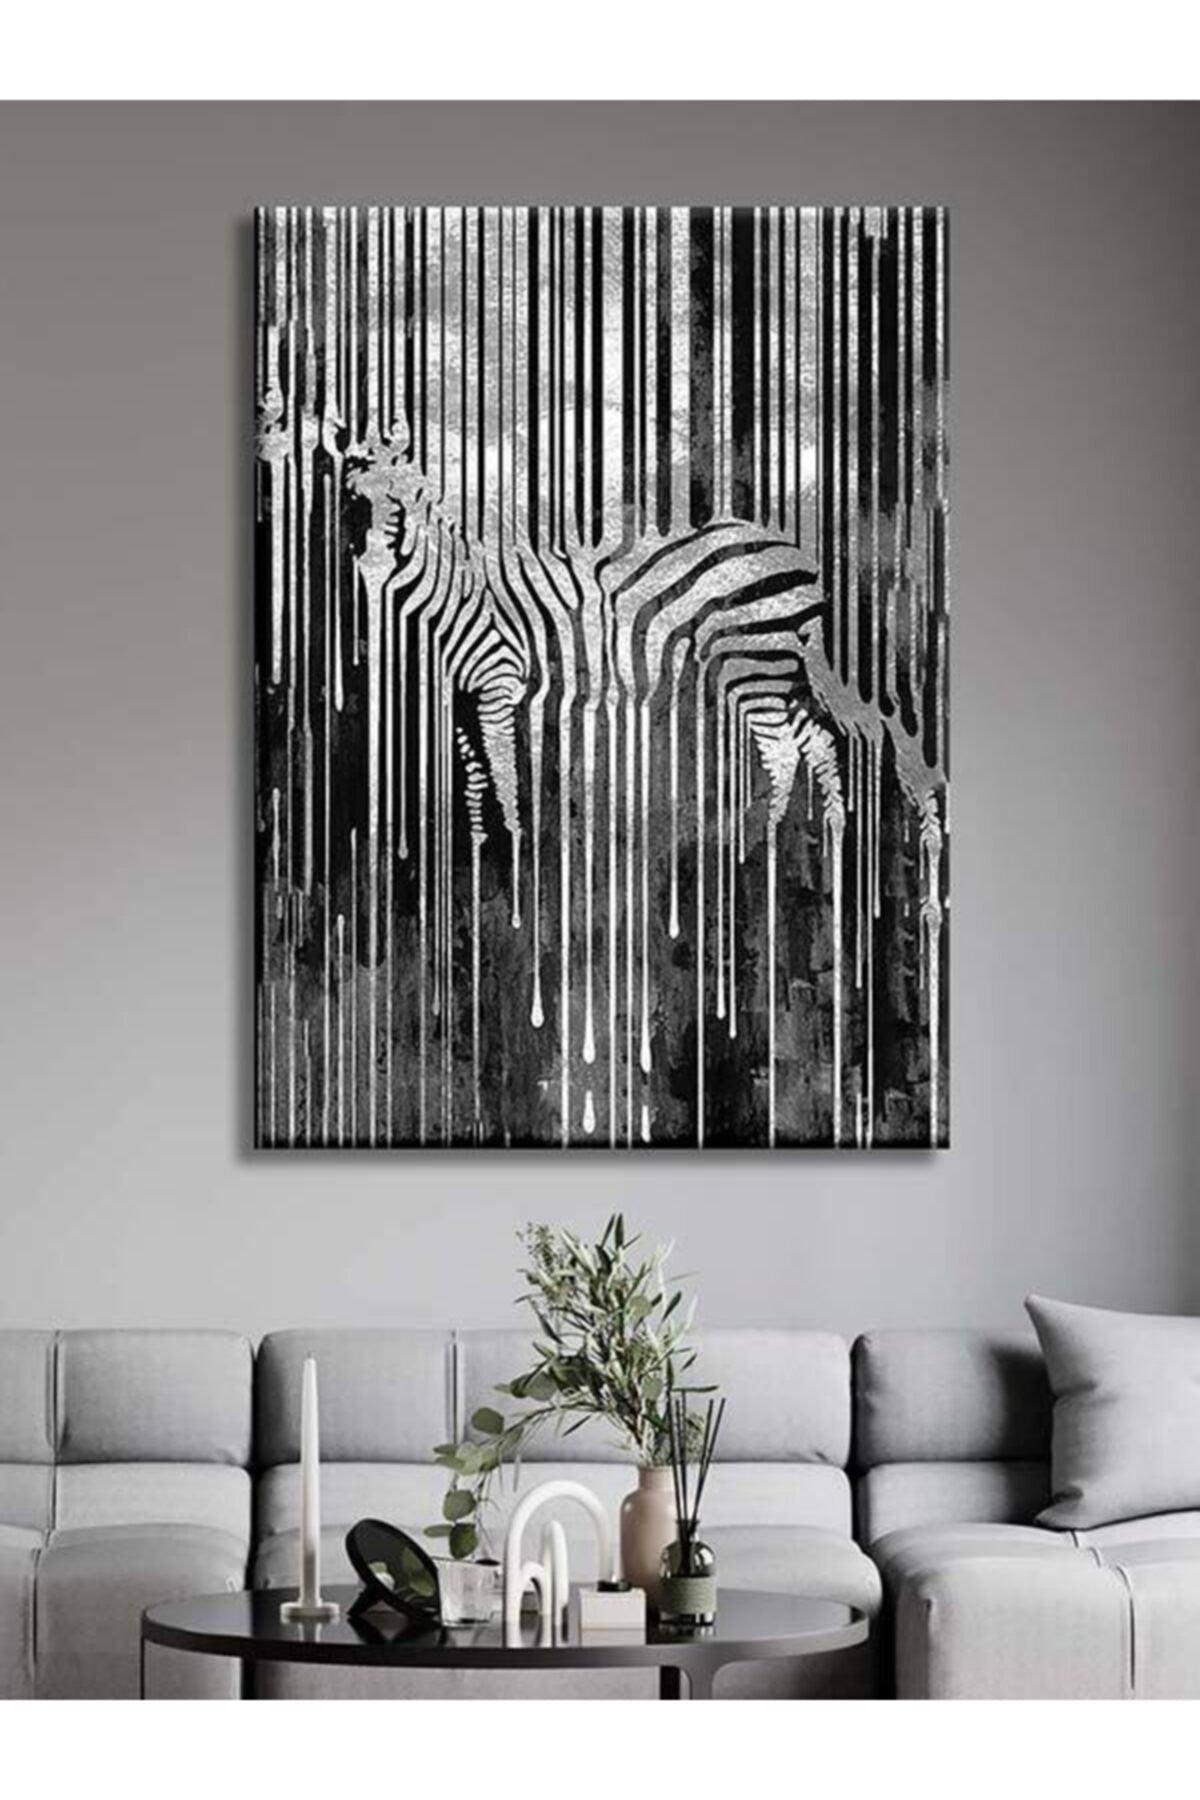 Silver Zebra Decorative Canvas Painting - Voov2009 - Swordslife